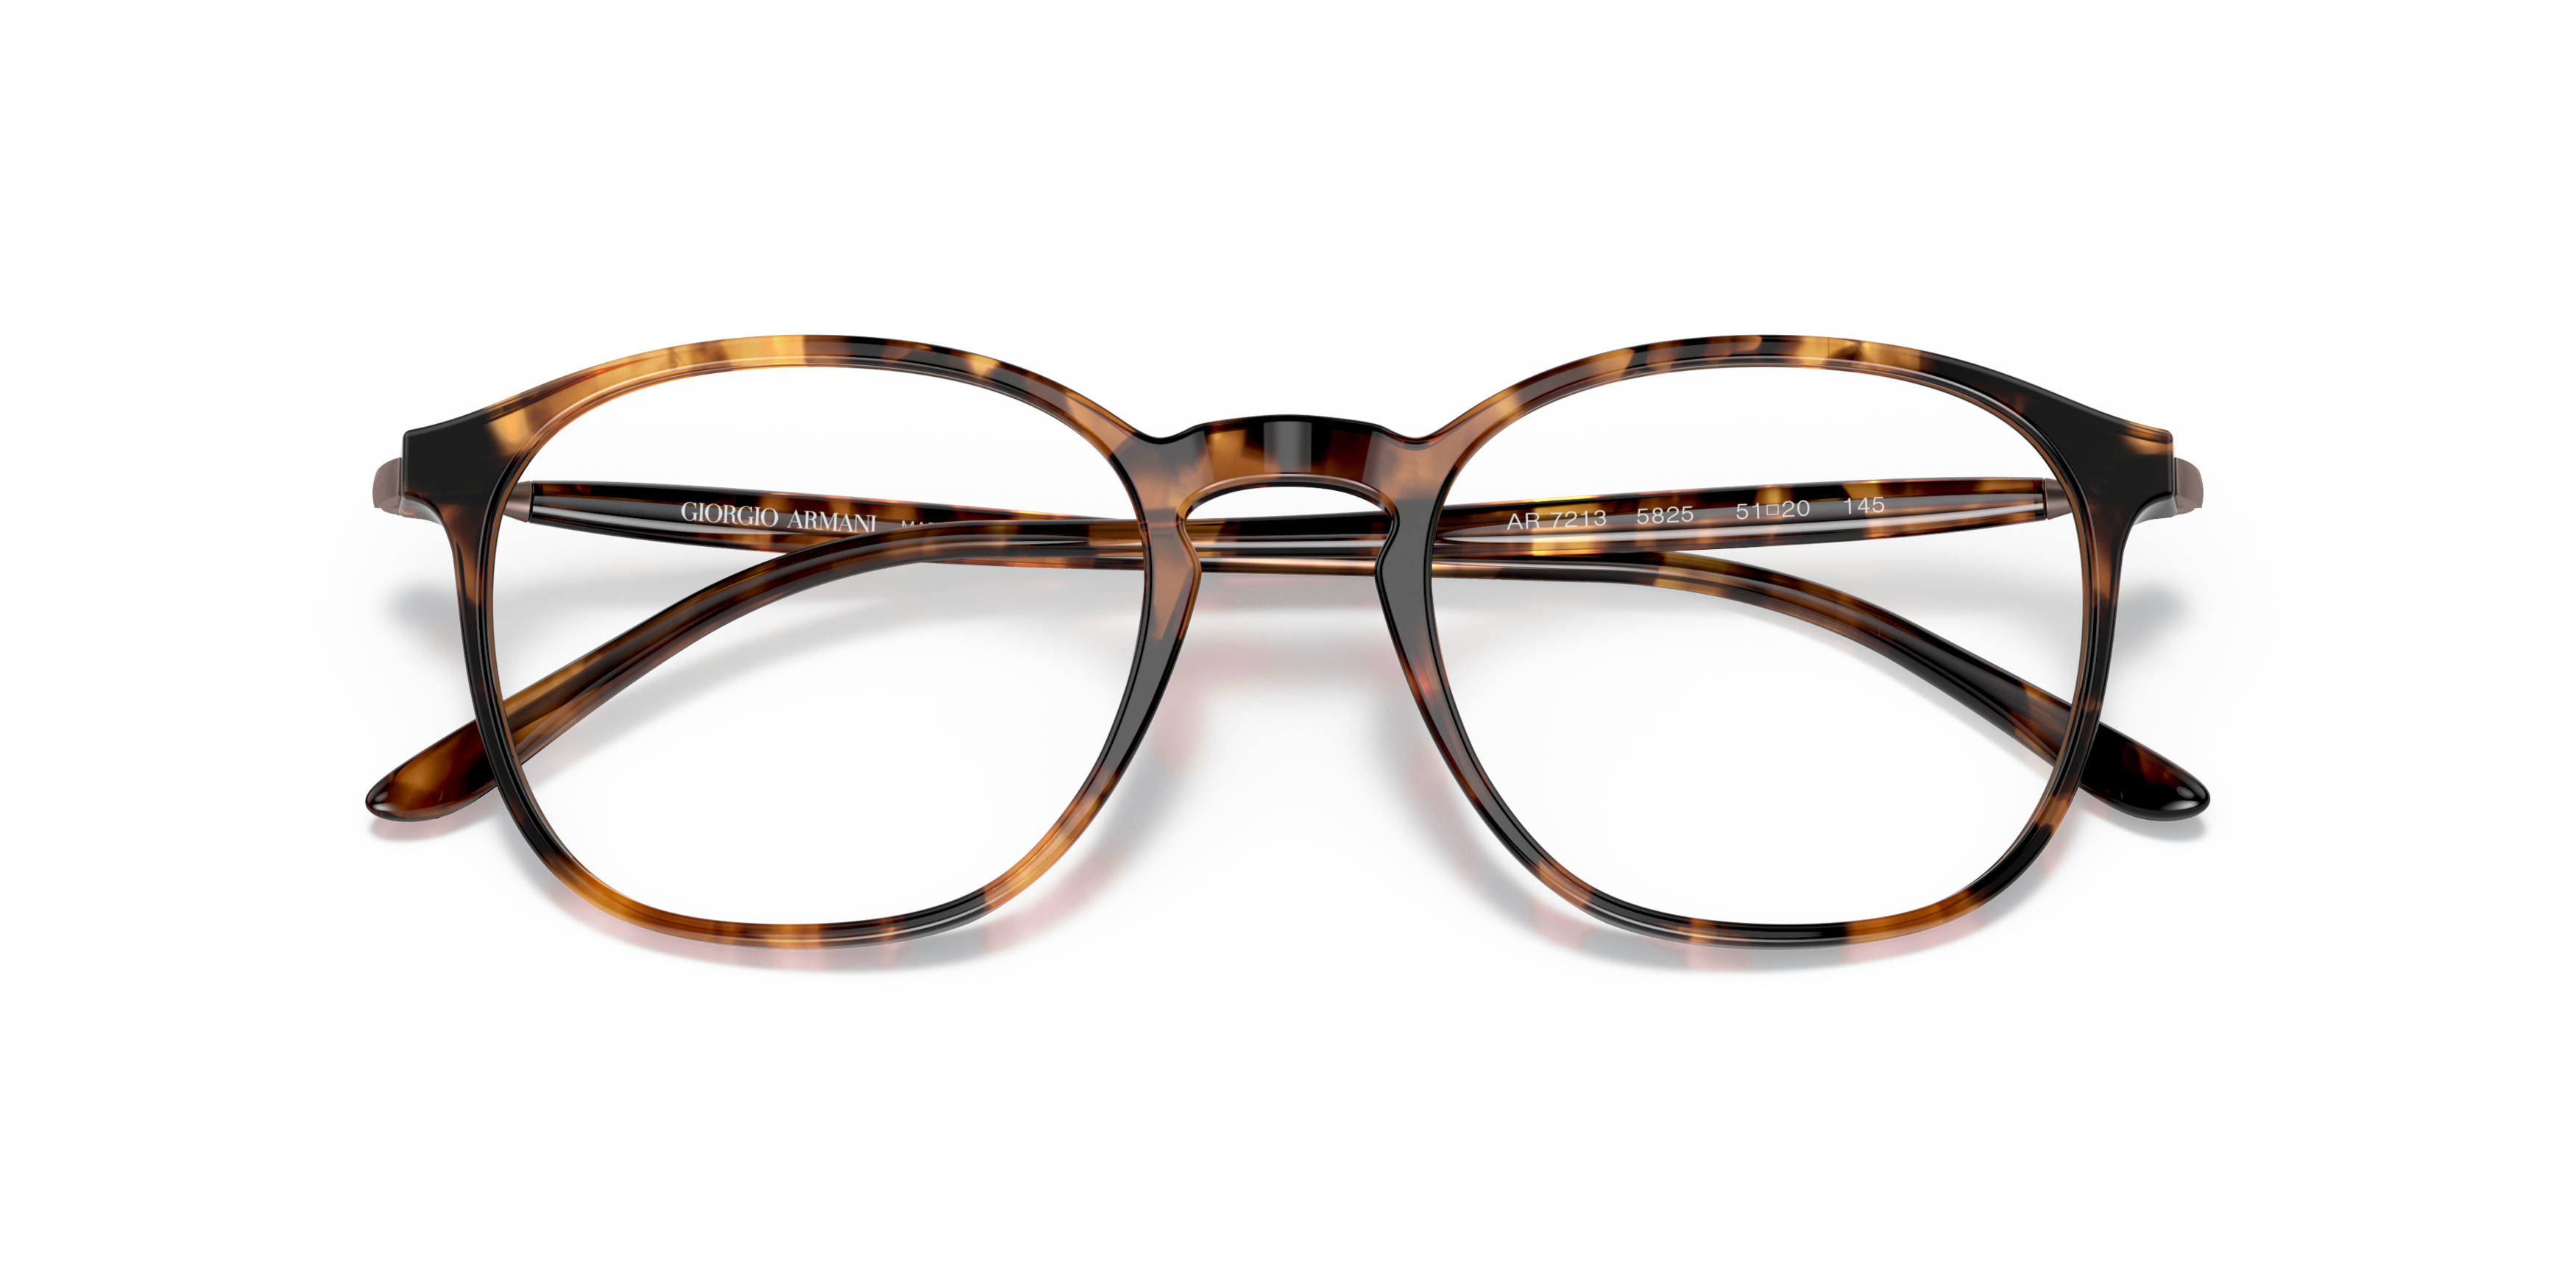 Folded Giorgio Armani AR 7213 Glasses Transparent / Tortoise Shell